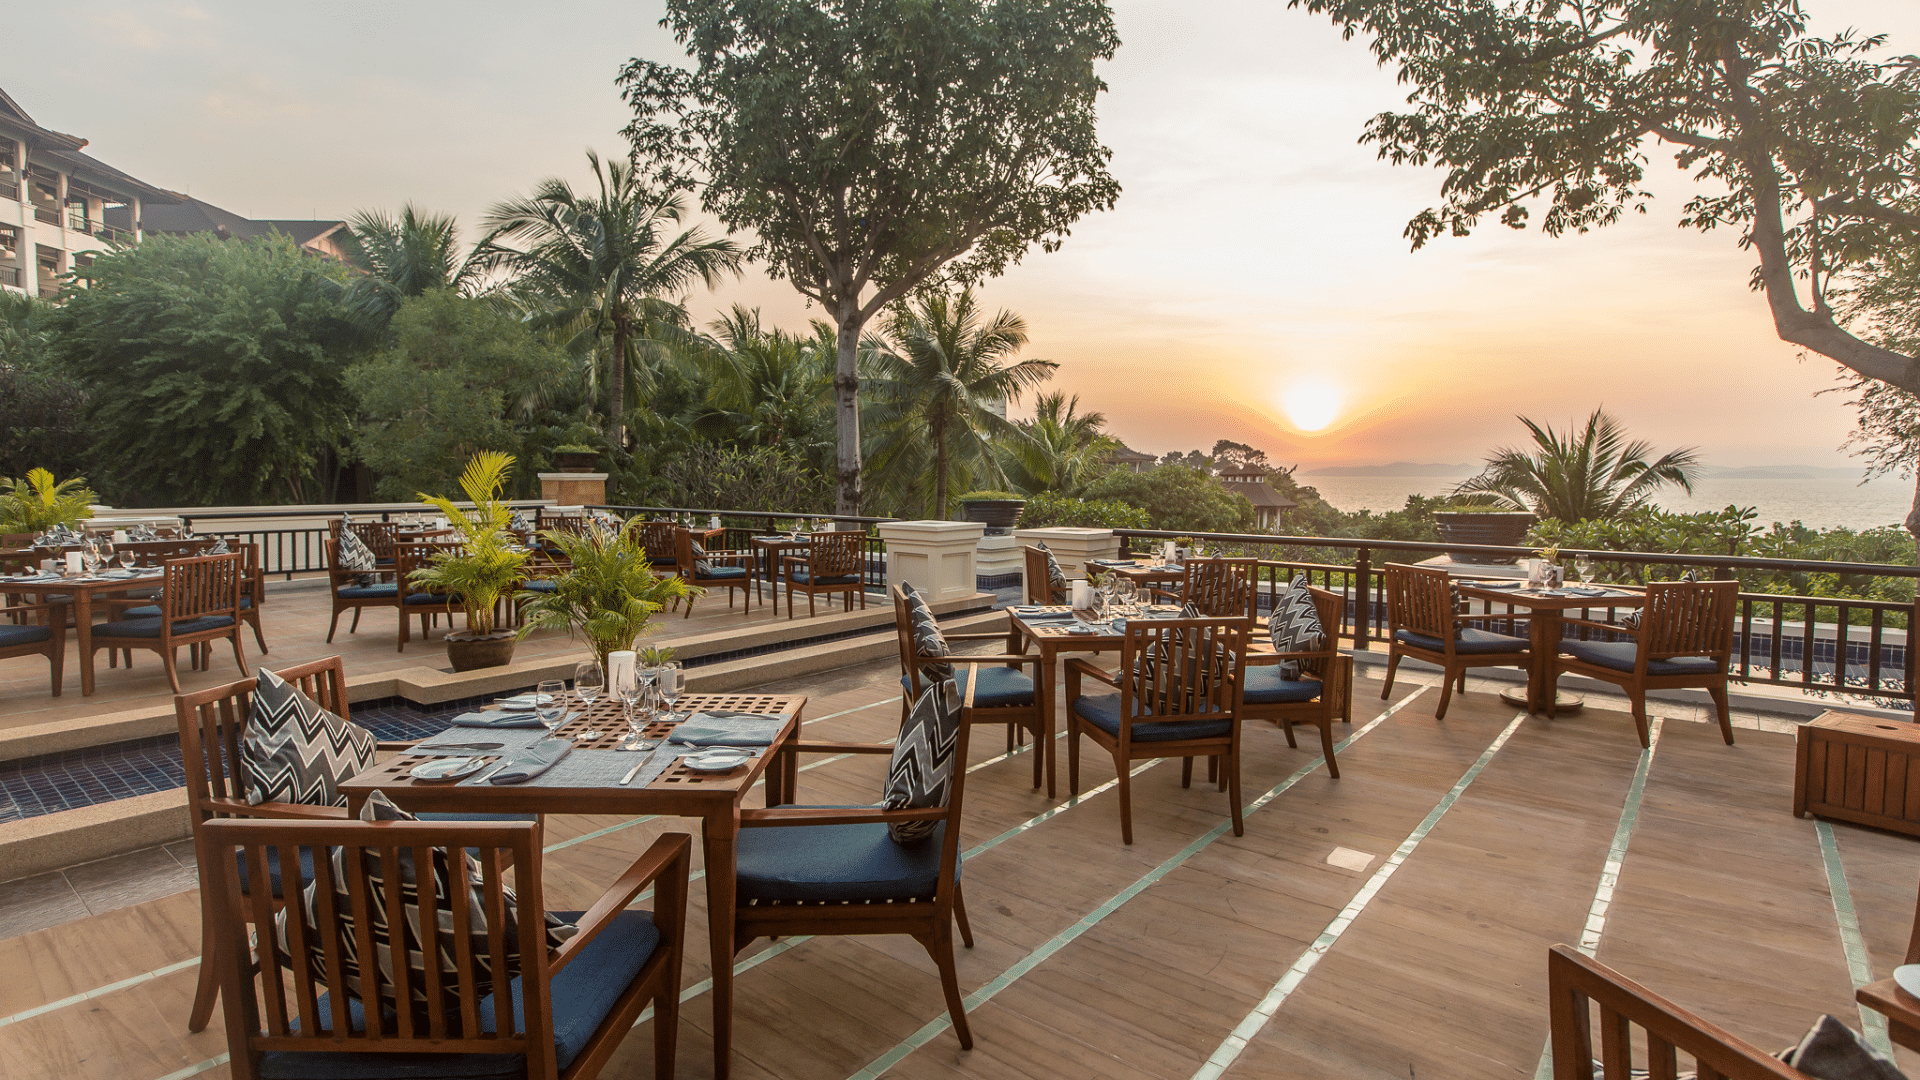 Pattaya Resort Terrasse Restaurant